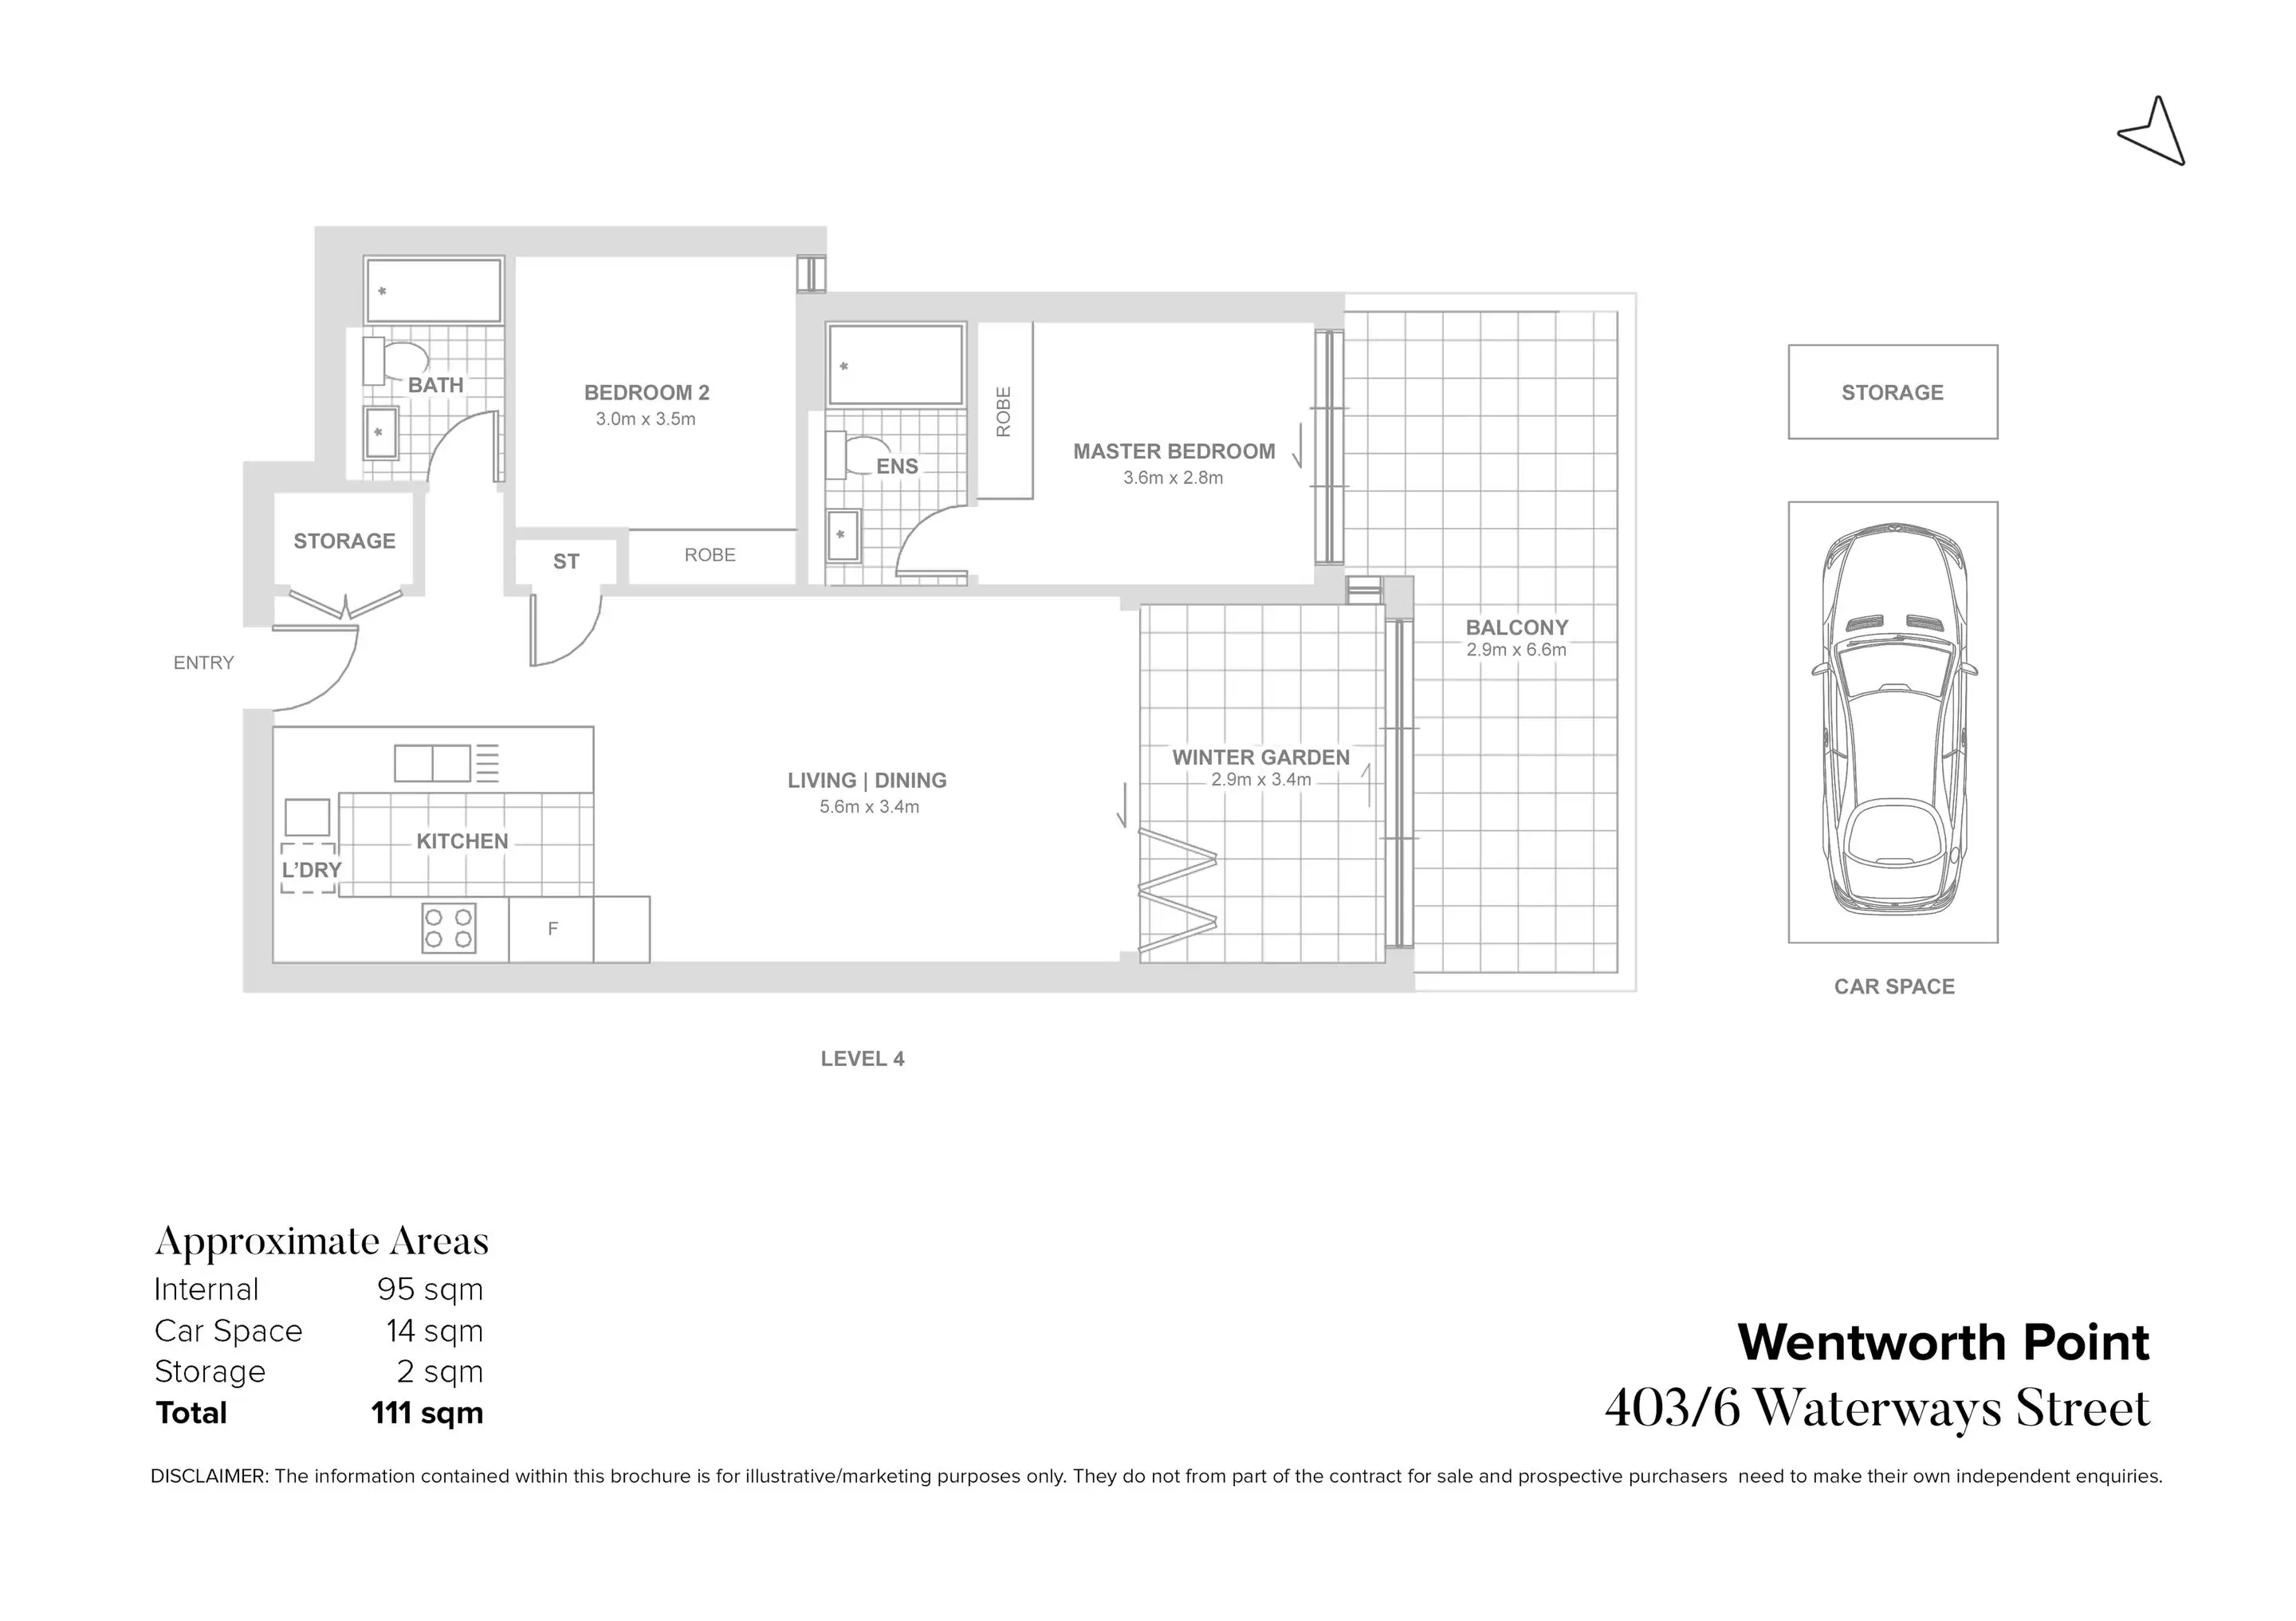 403/6 Waterways Street, Wentworth Point Sold by Chidiac Realty - floorplan